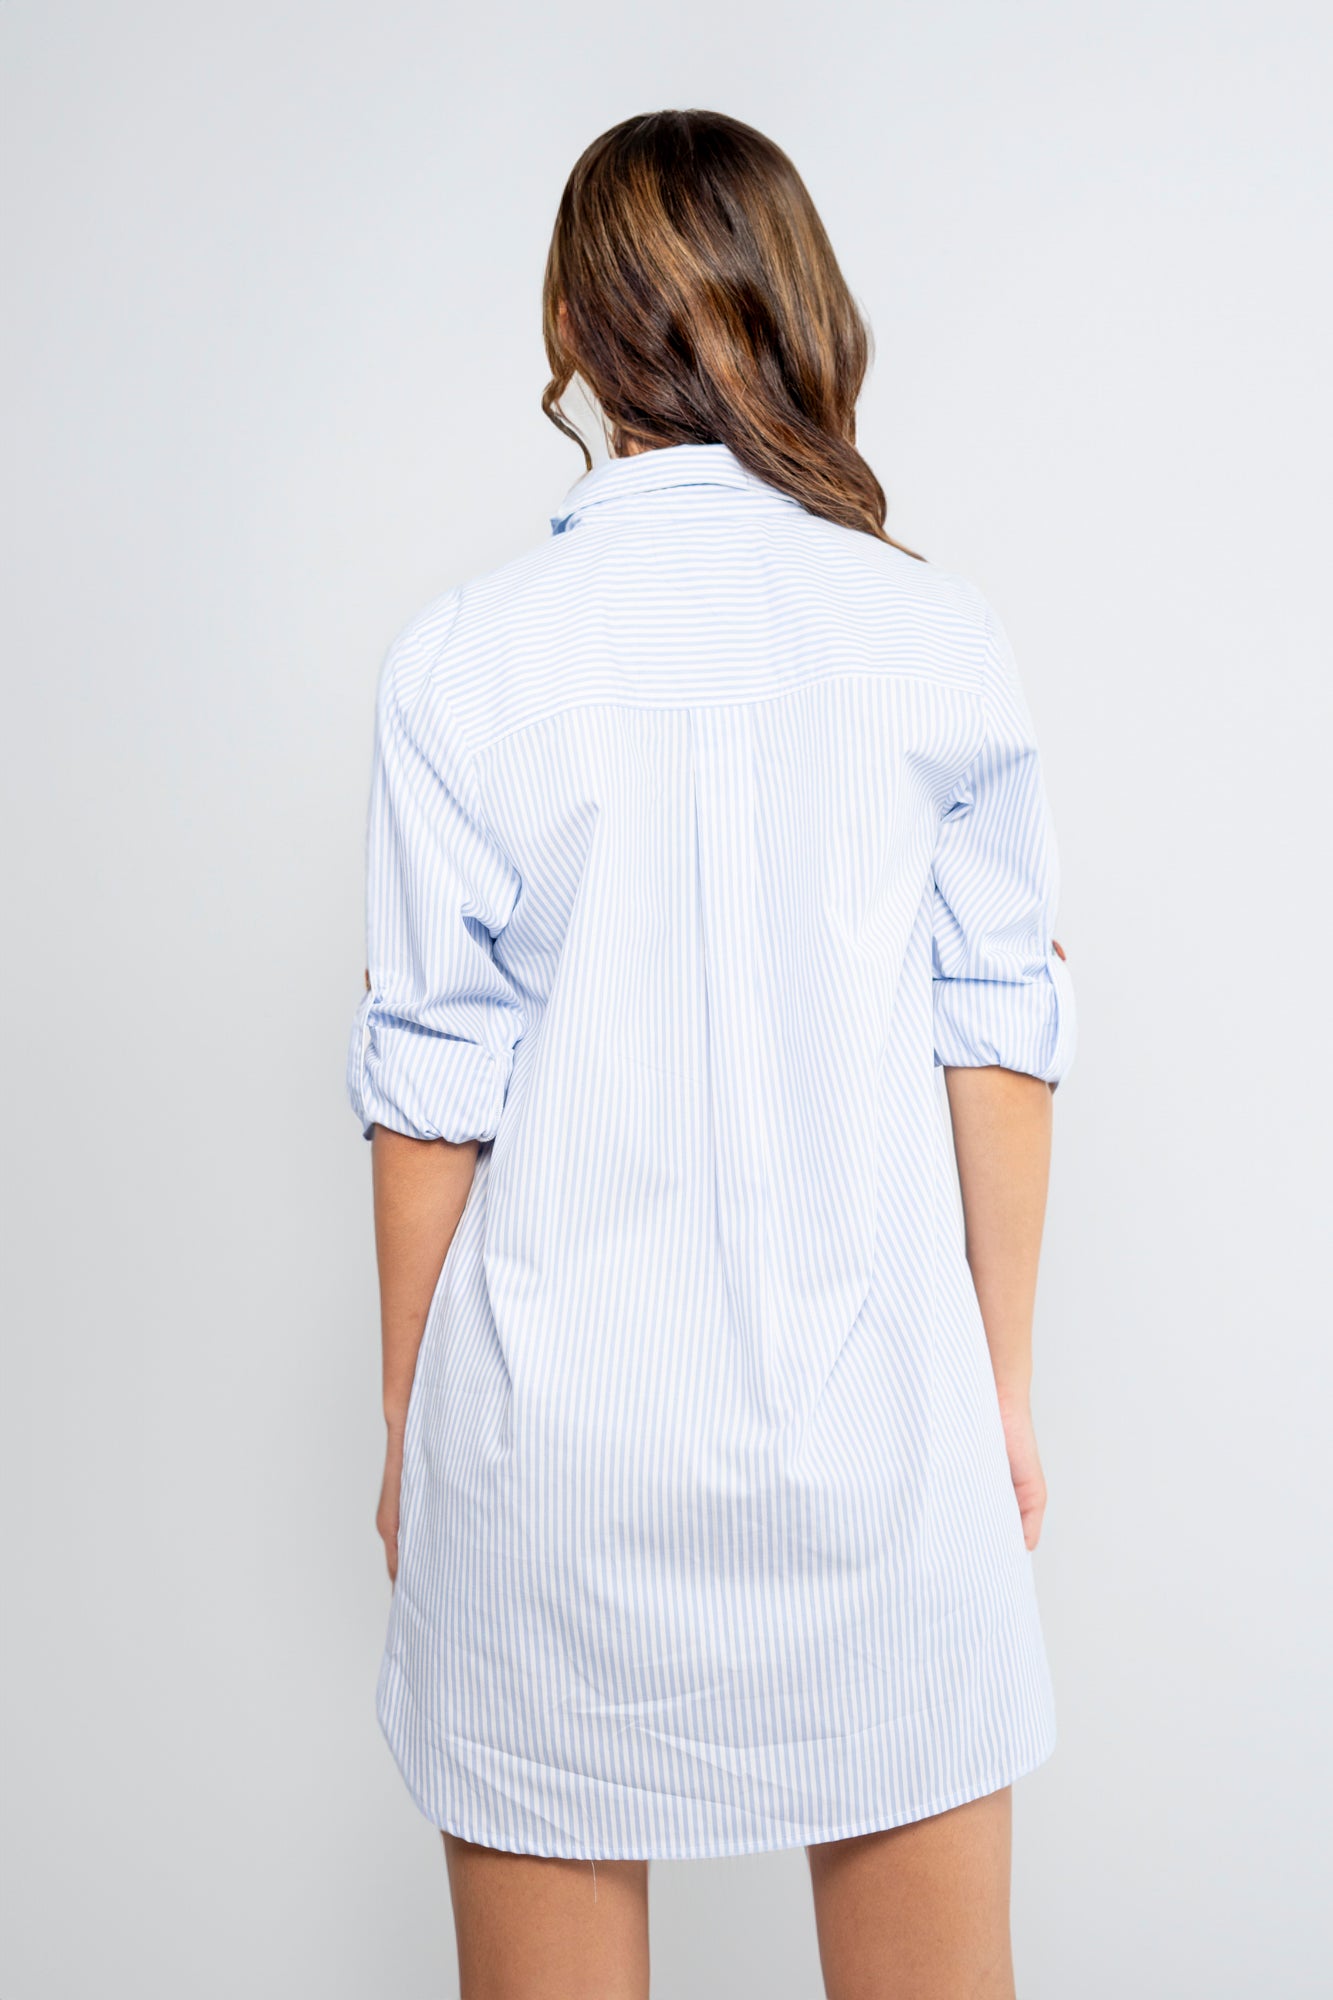 Button-Up Shirt blue - white